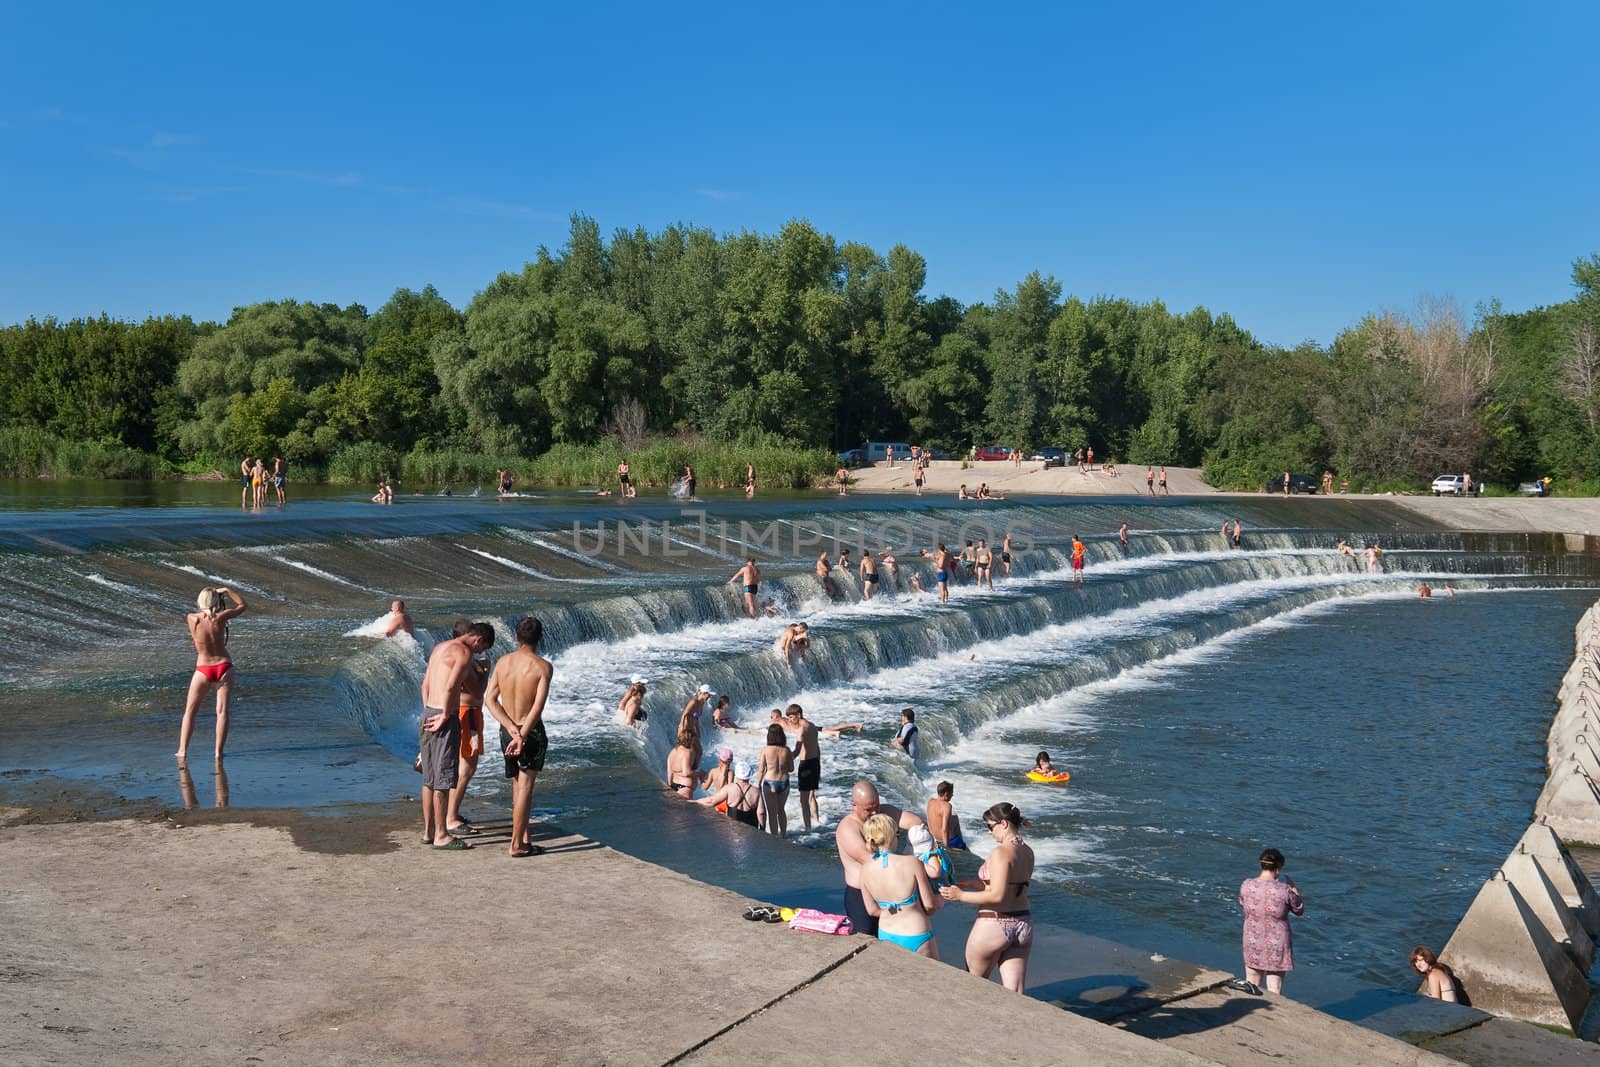 Summer Recreation near a River by y_serge